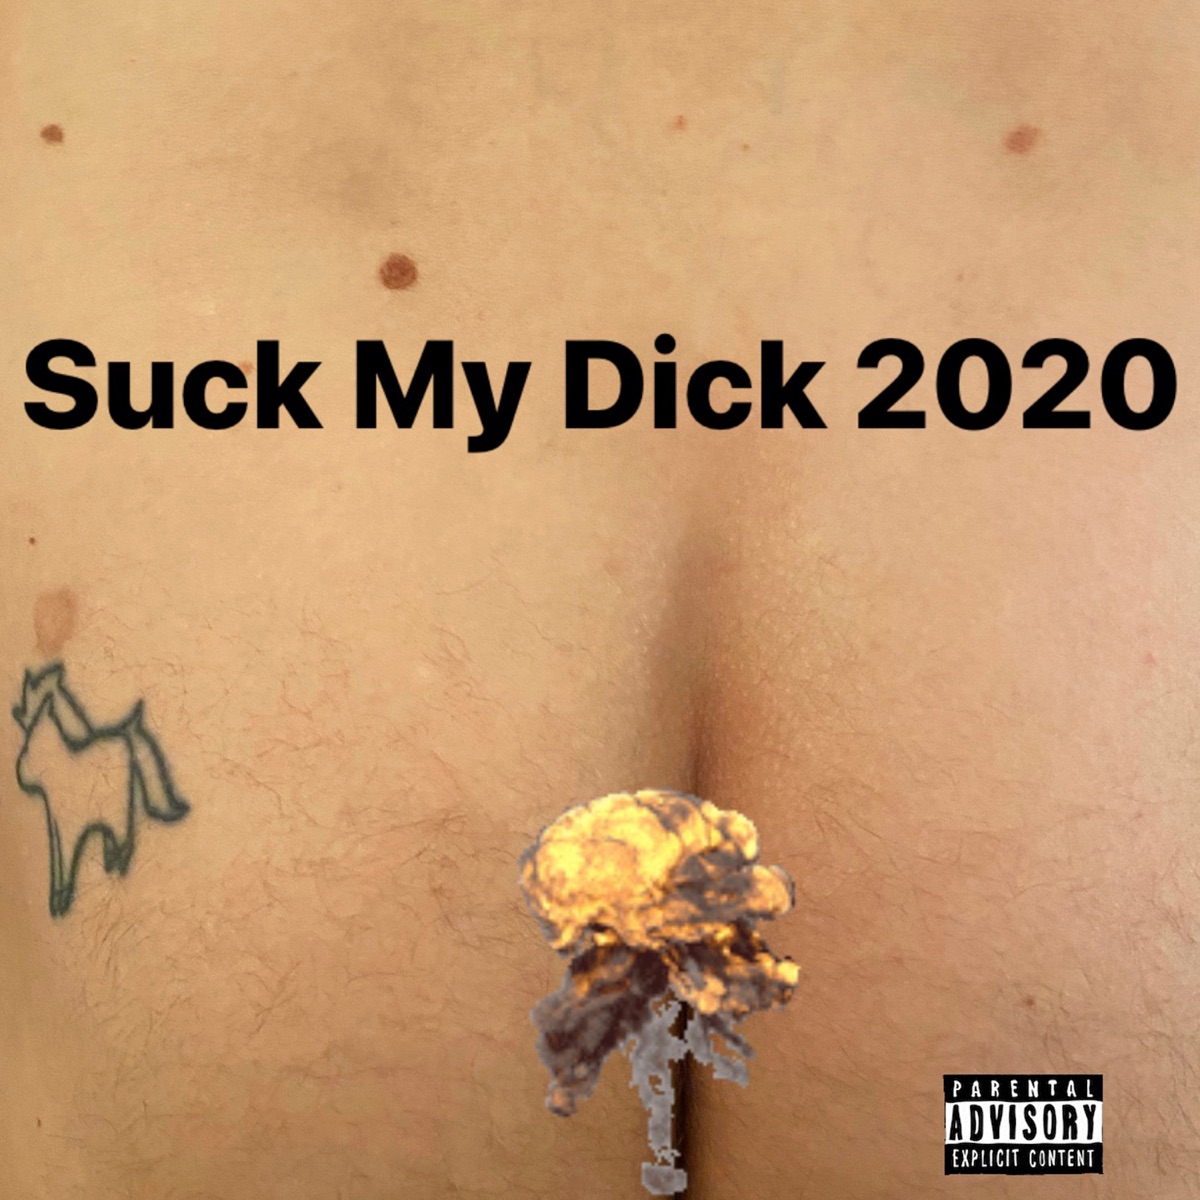 chuck wyckoff share suck my dick son photos